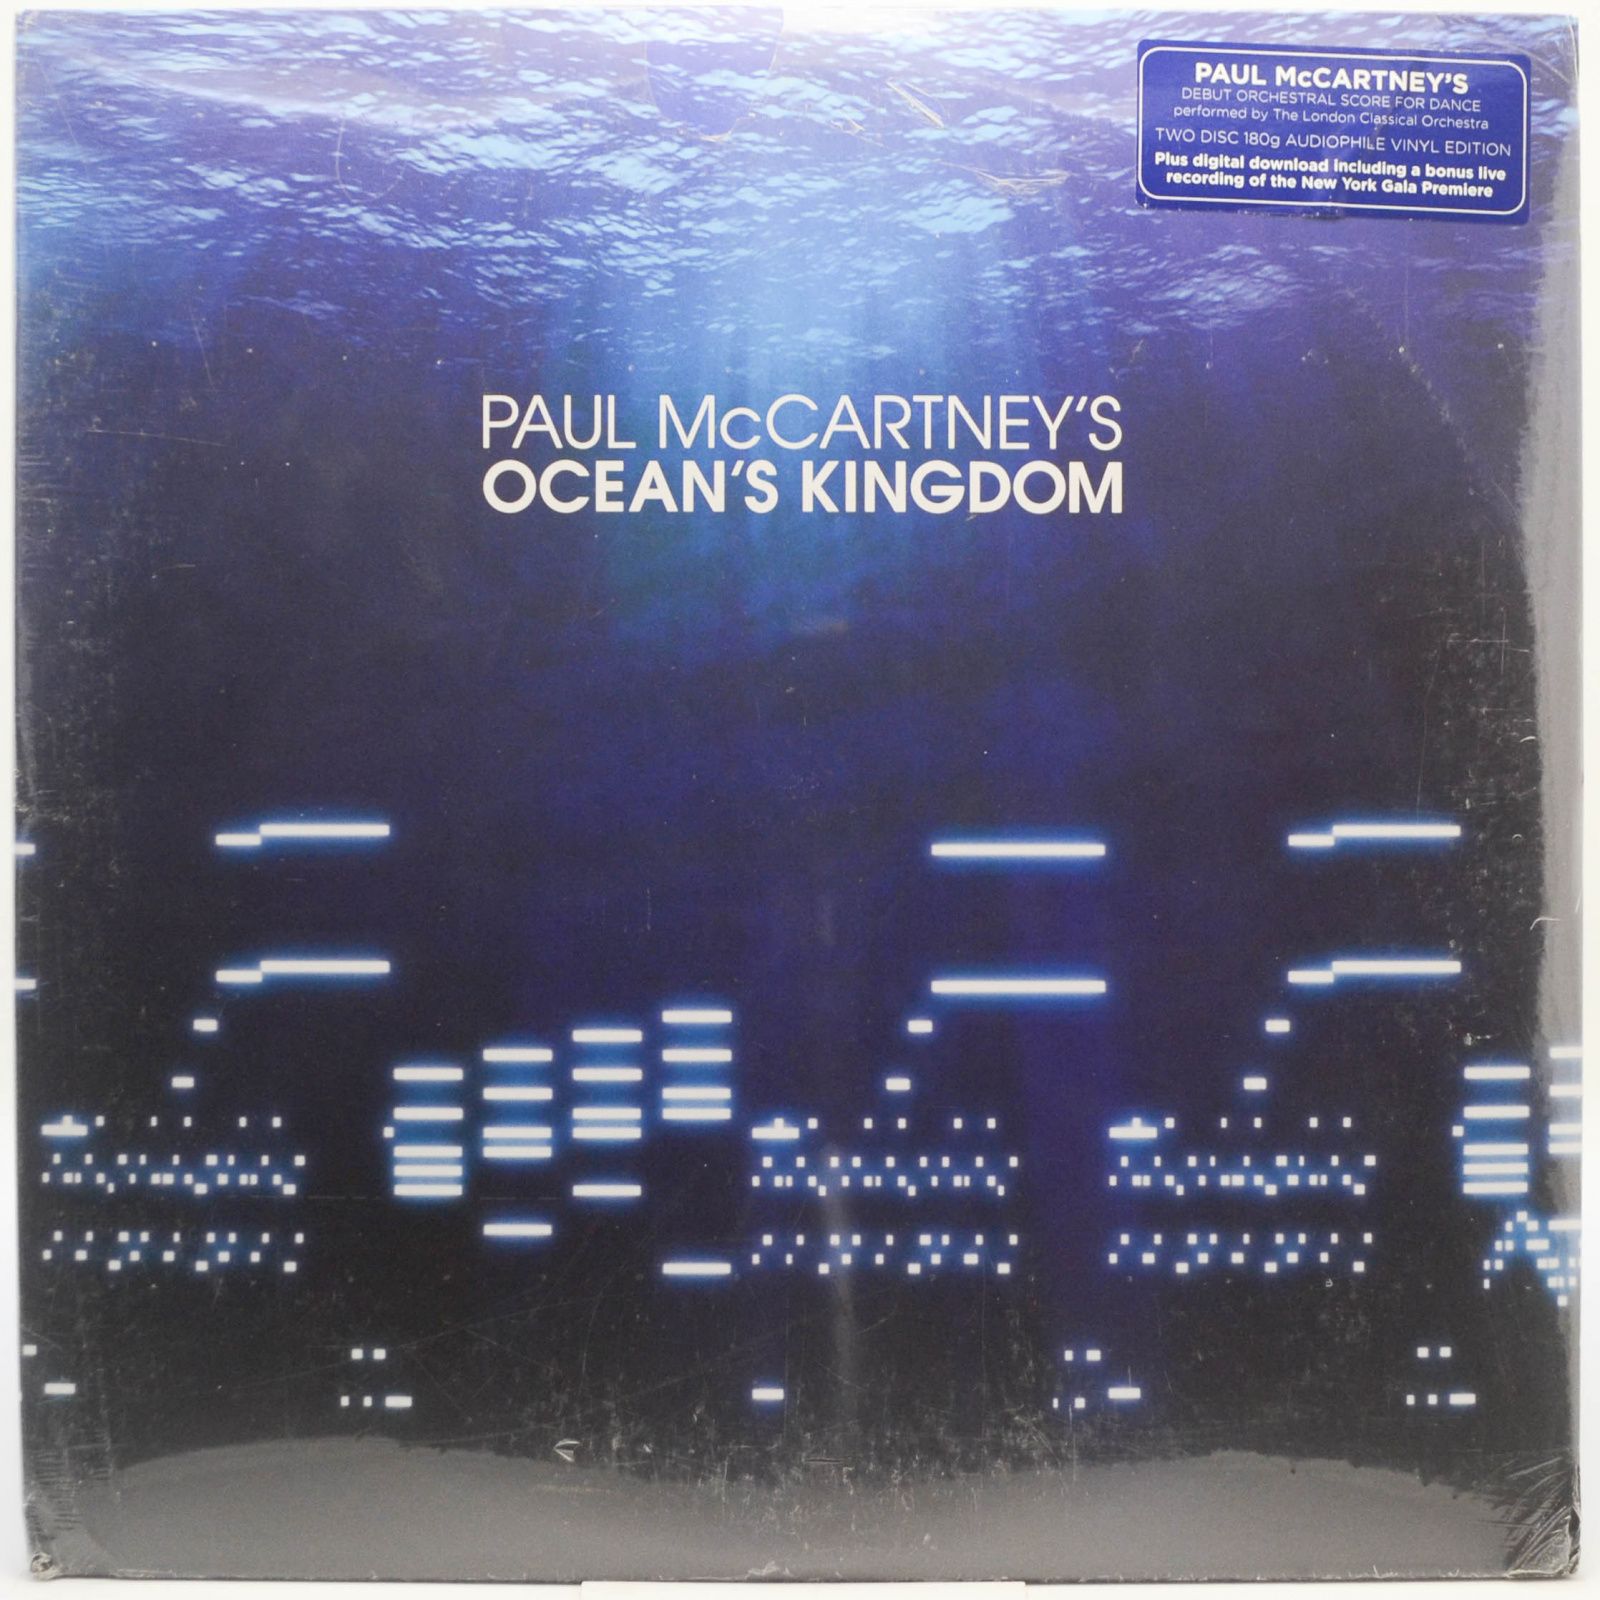 Paul McCartney — Ocean's Kingdom, 2011